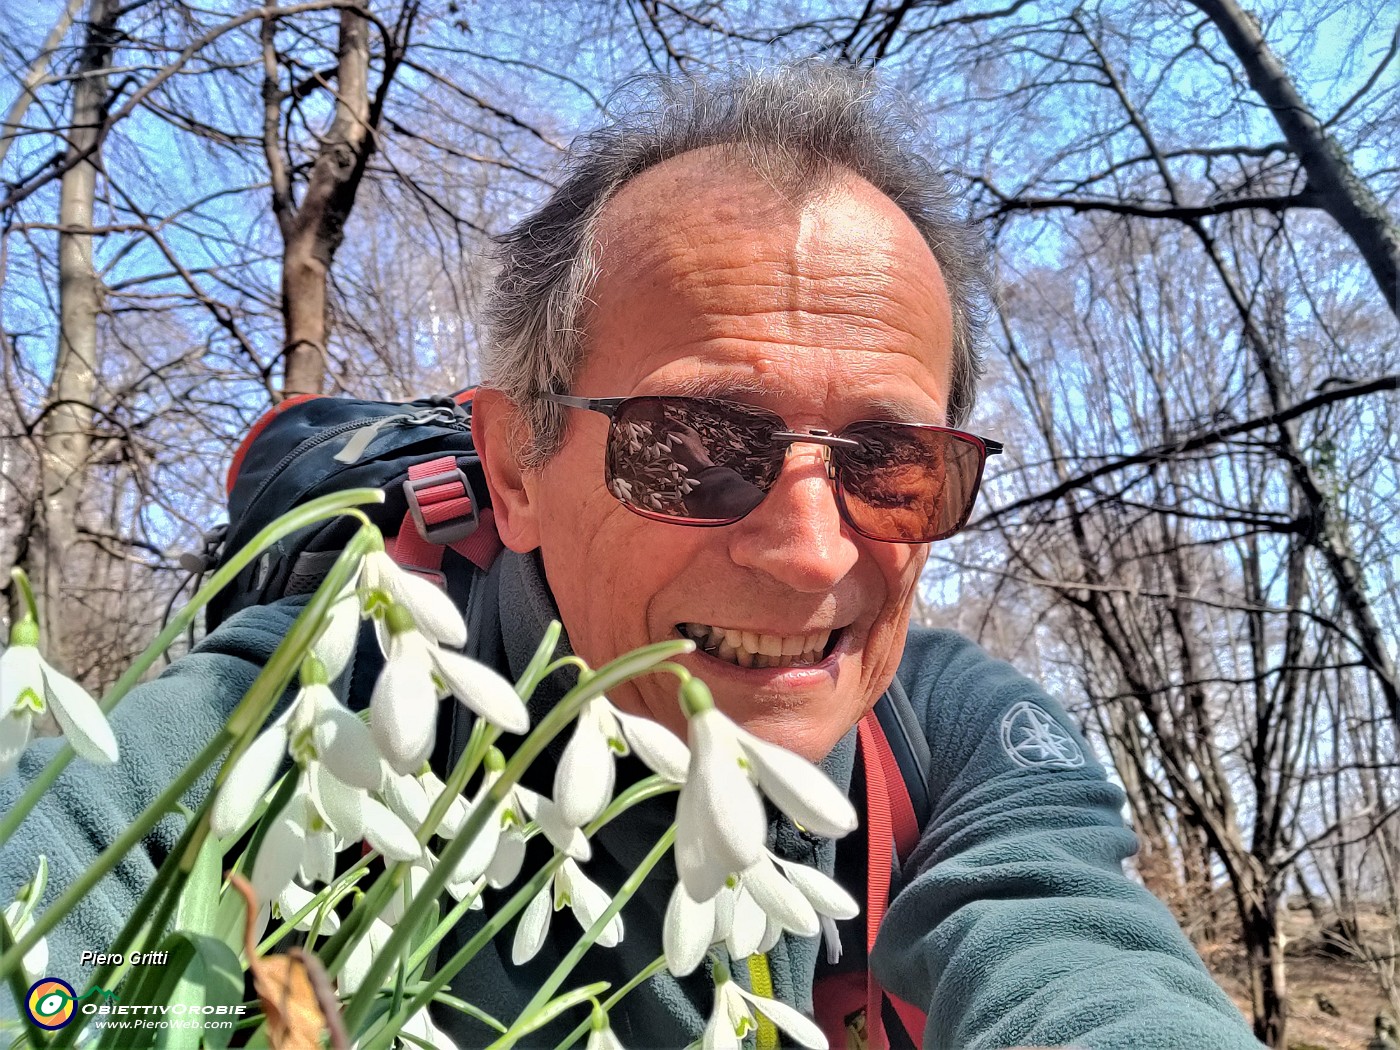 01 Festa di fiori sui sentieri al Monte Zucco - Galanthus nivalis (Bucanevi).jpg